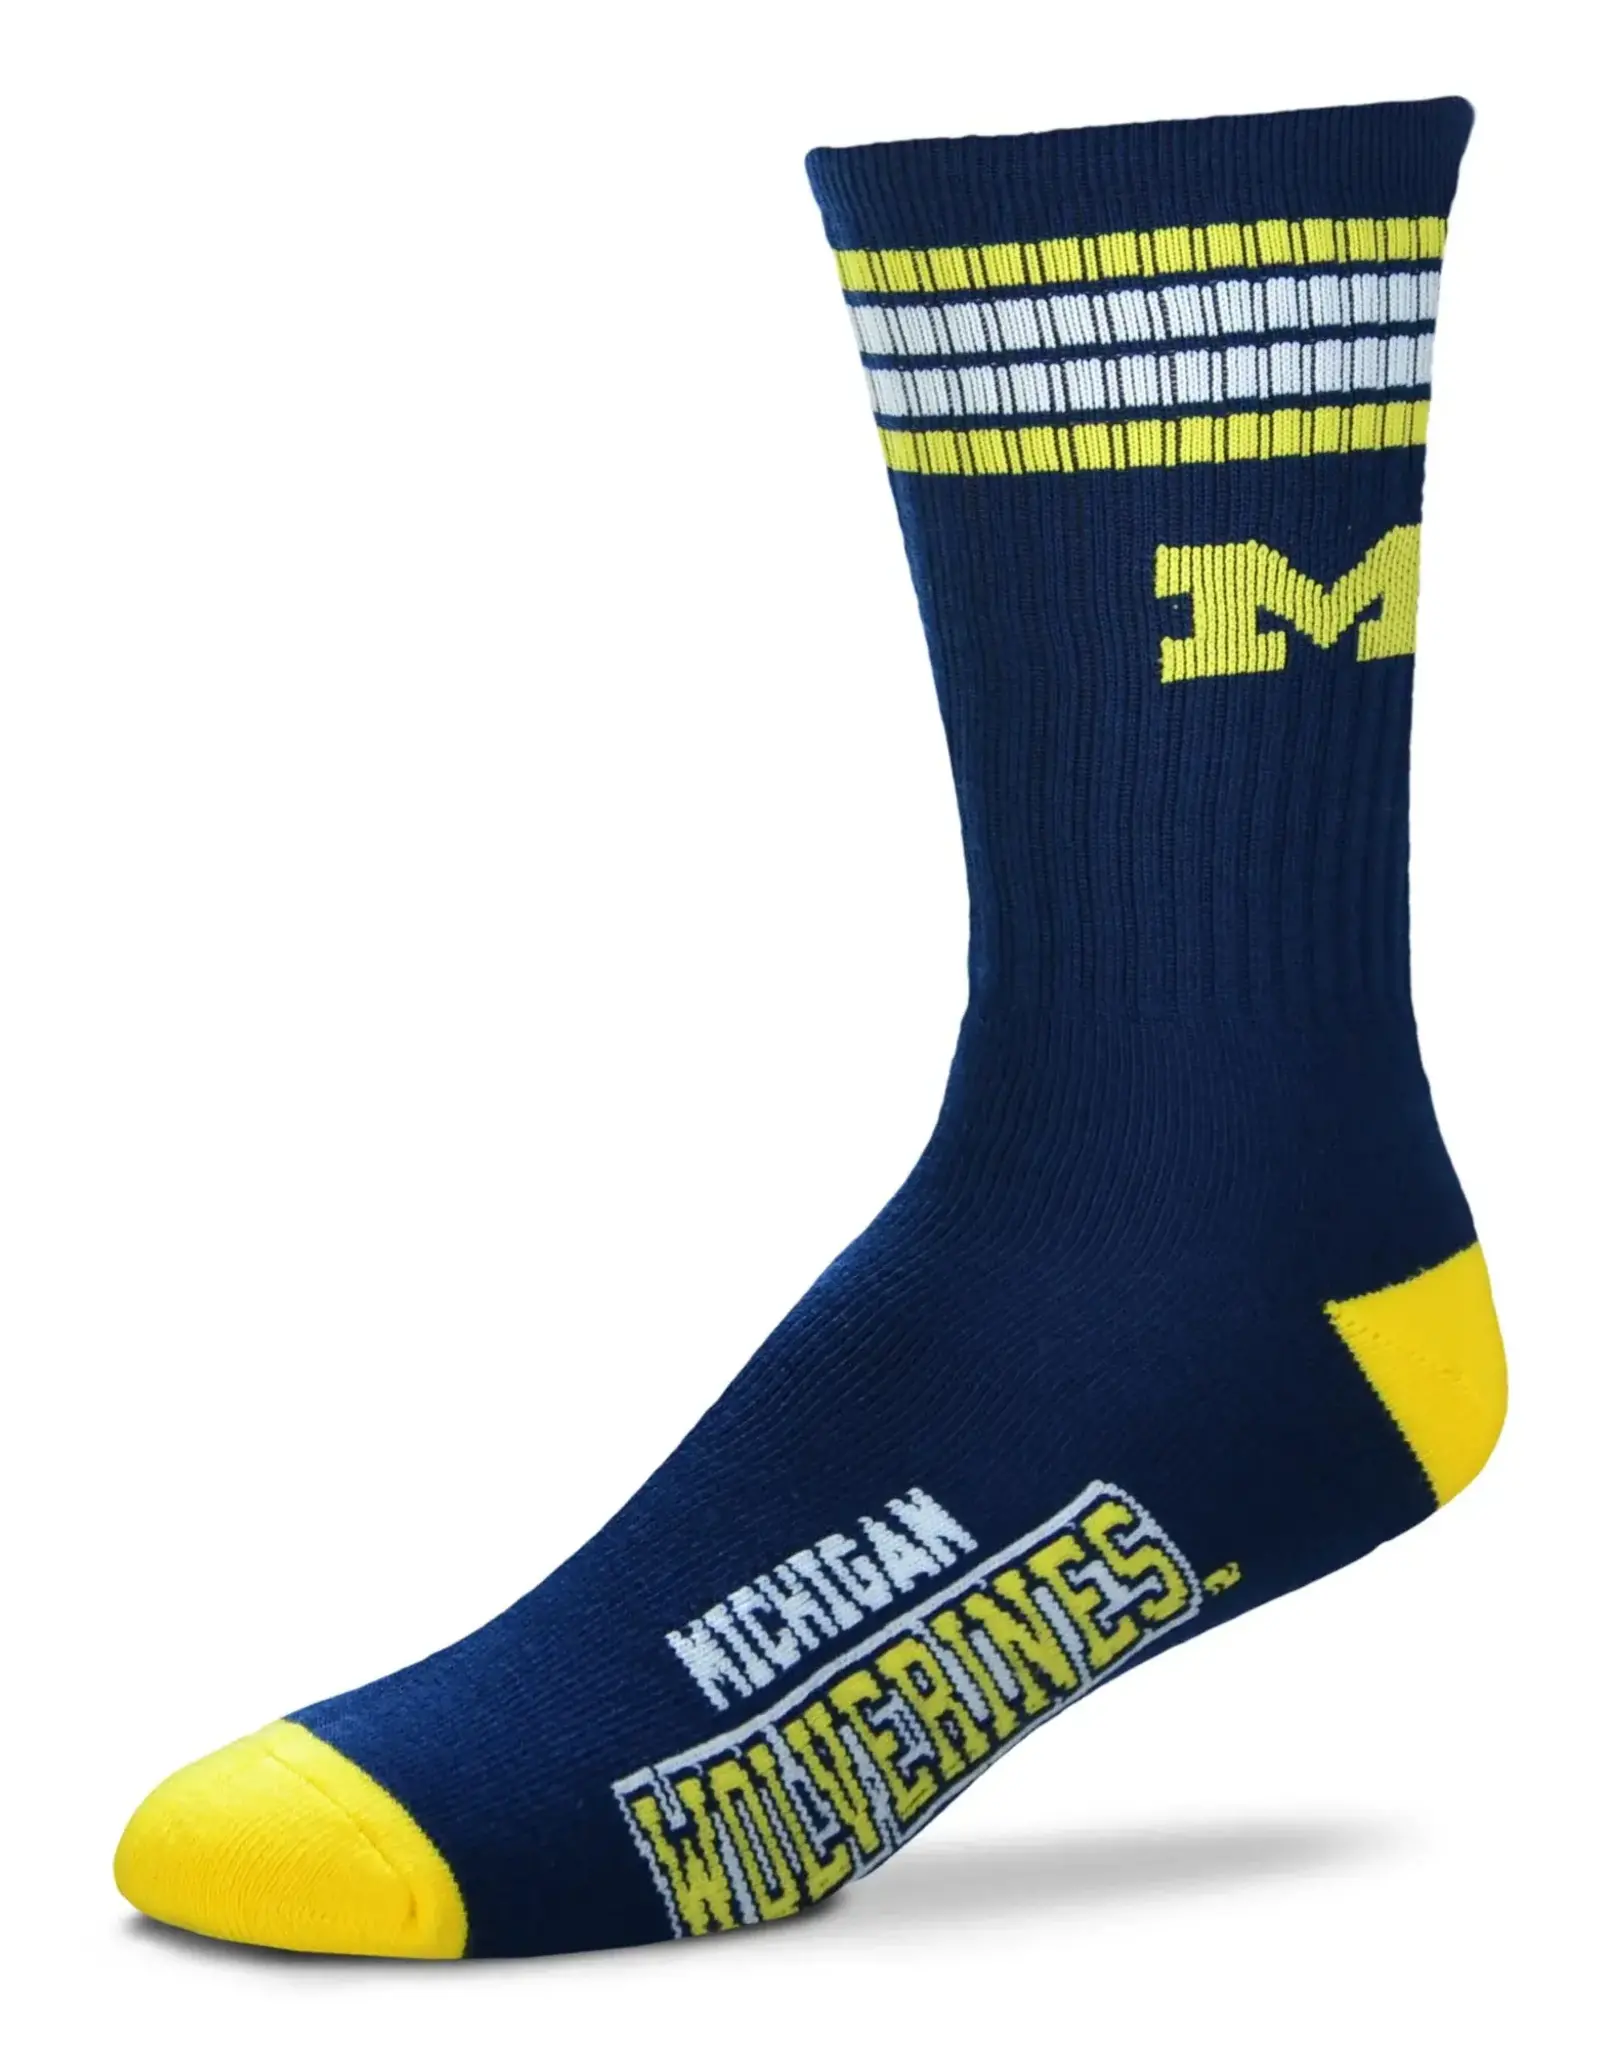 For Bare Feet Michigan Wolverines Men's Deuce Crew Socks